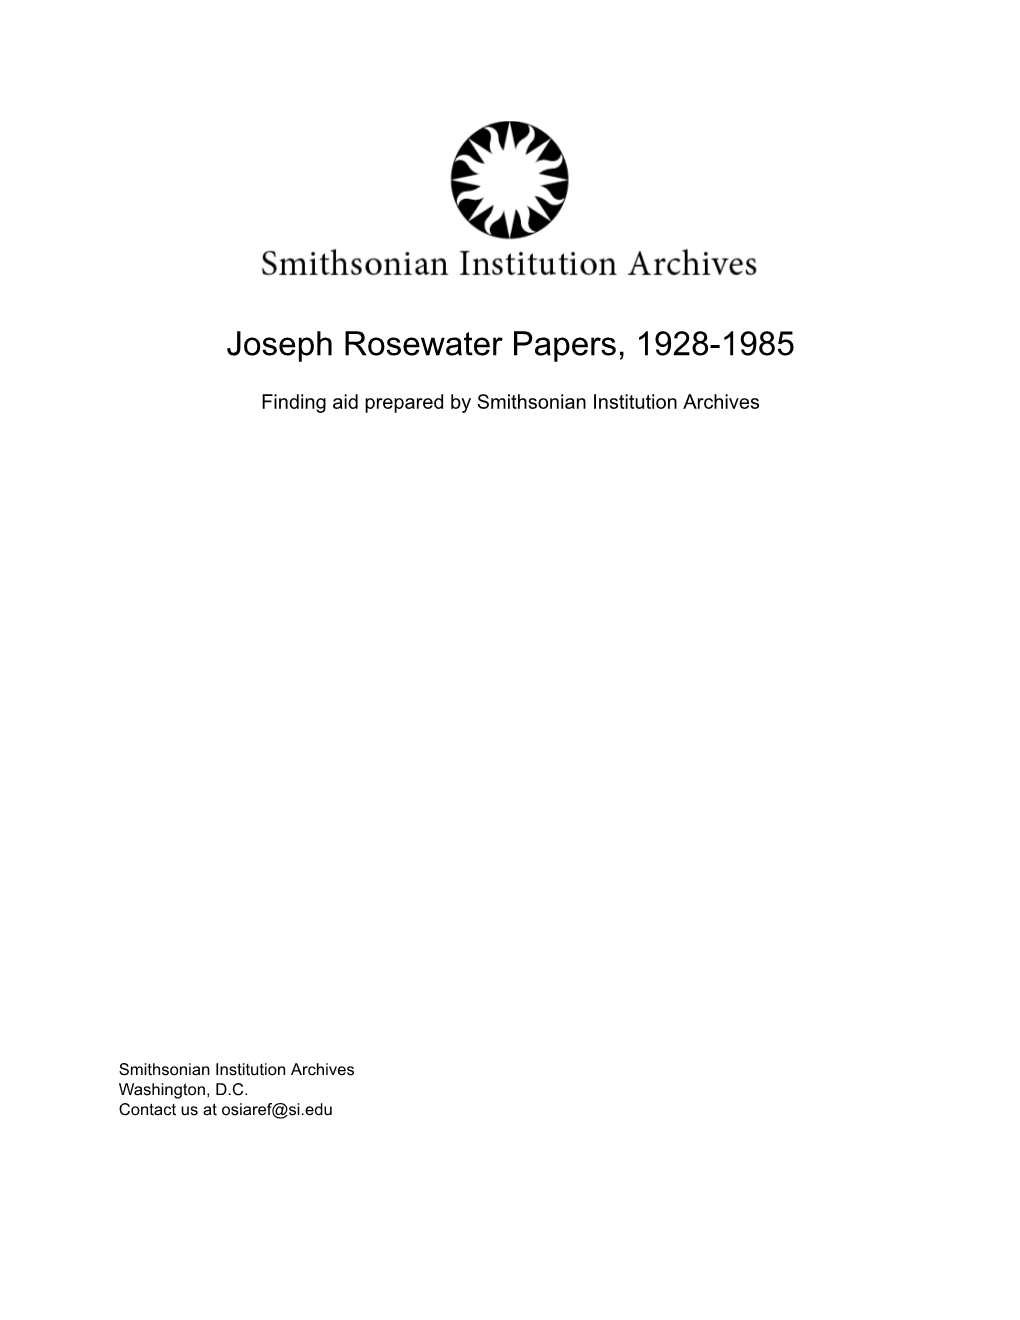 Joseph Rosewater Papers, 1928-1985